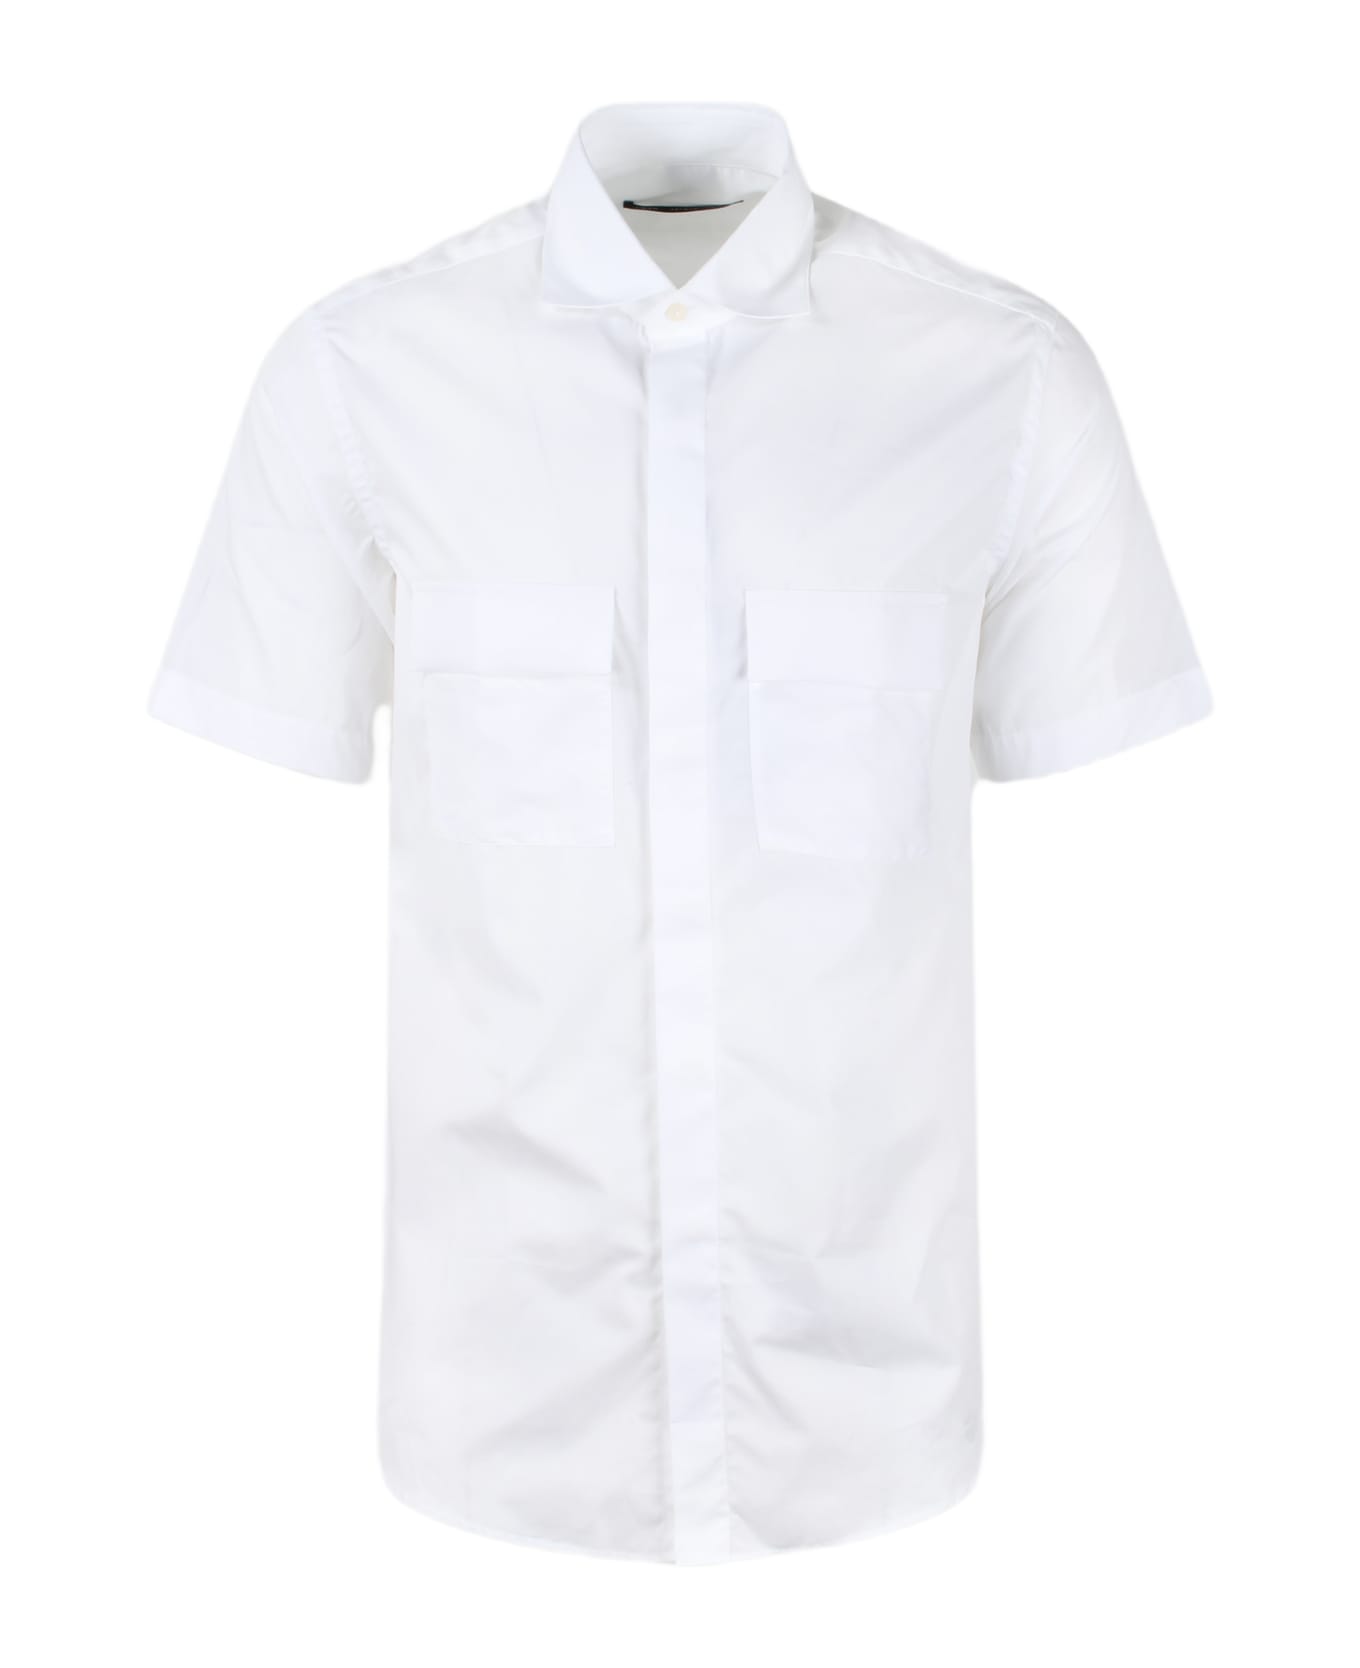 Low Brand Double Pocket Cotton Poplin Shirt - White